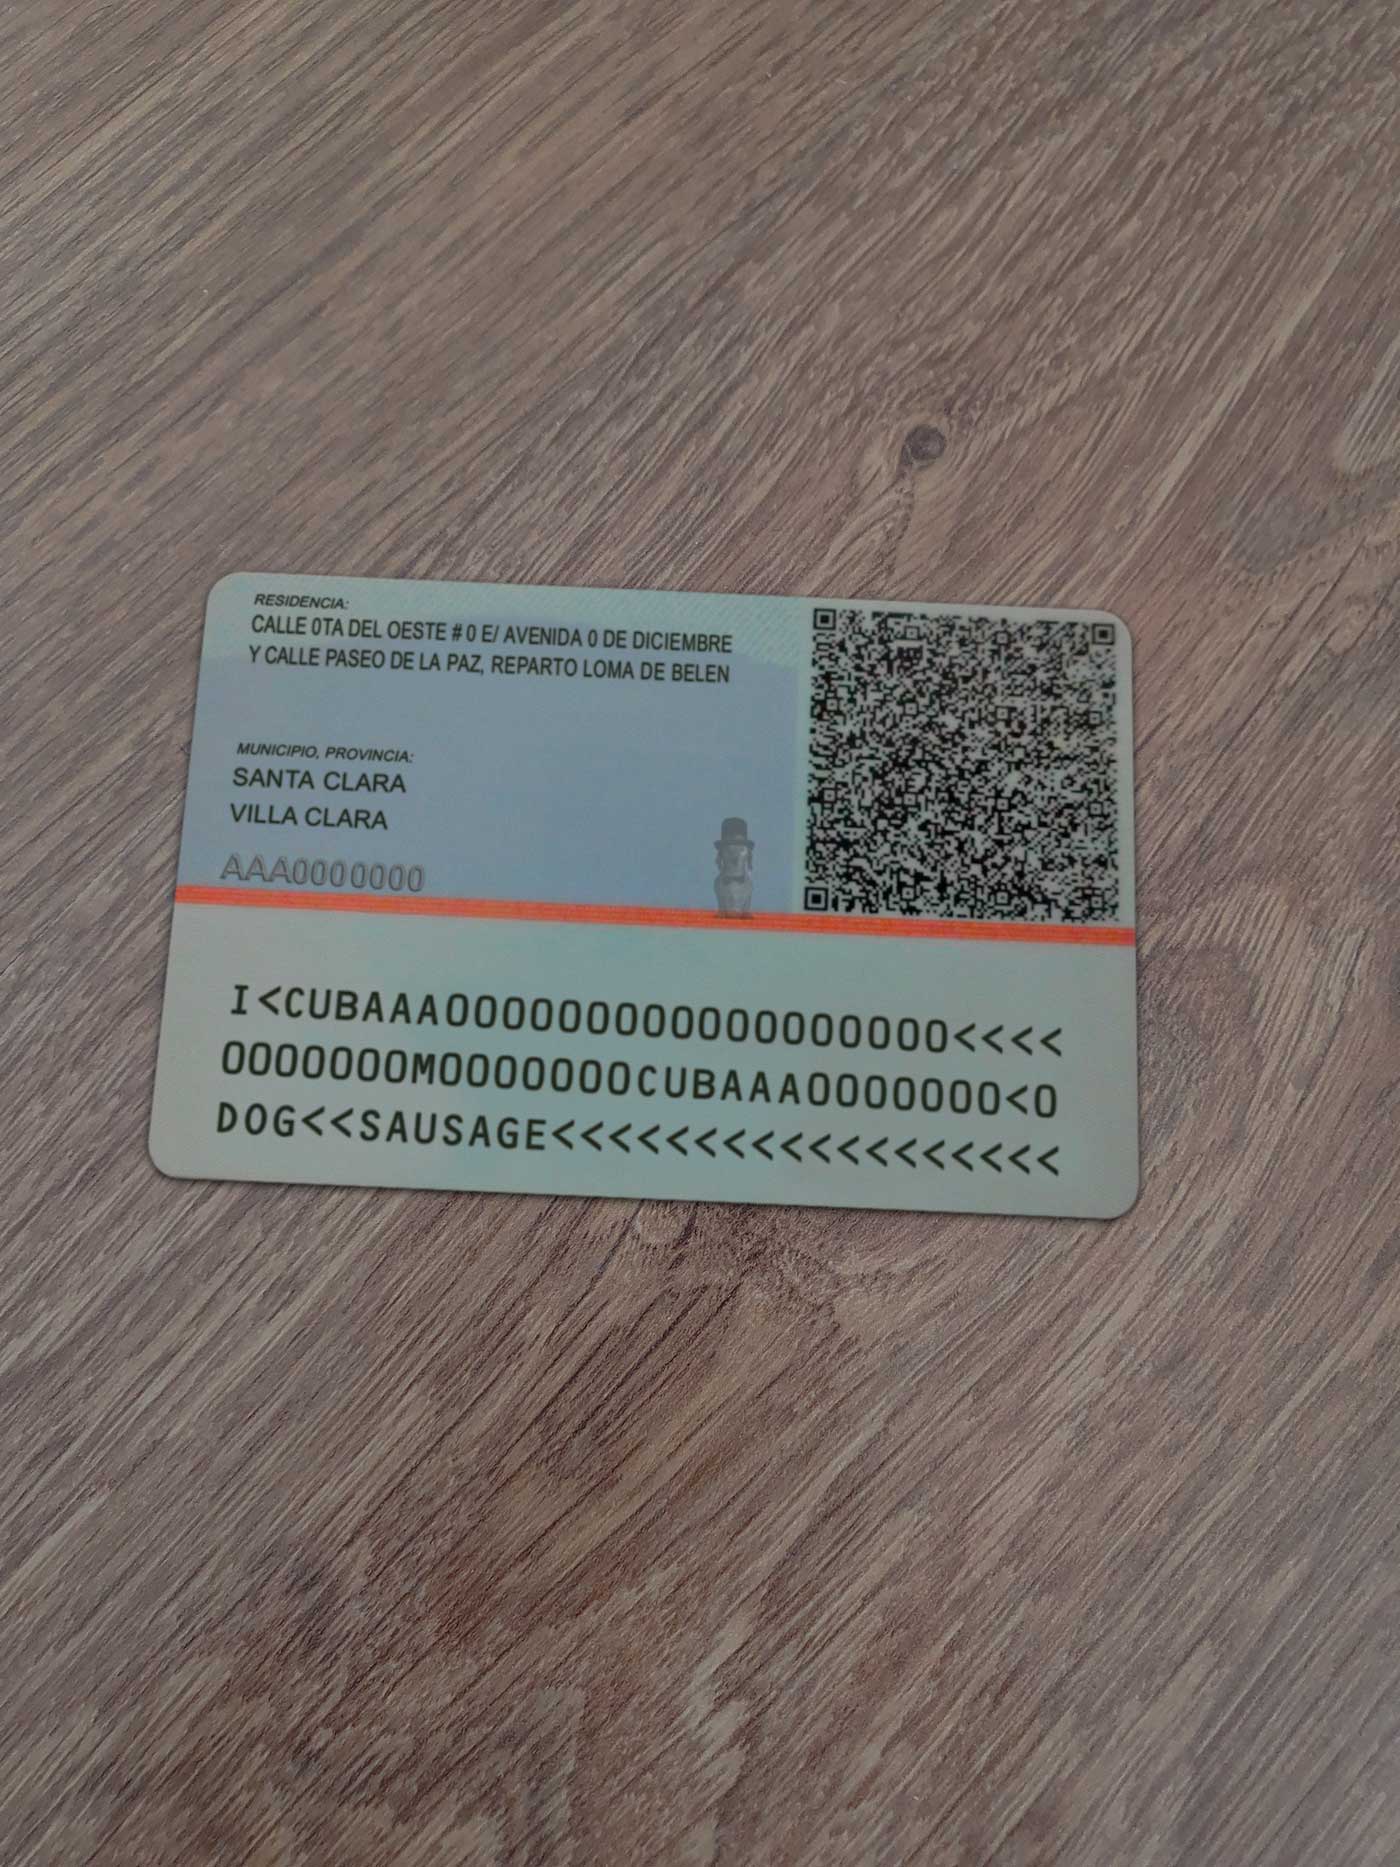 Cuba Identity Card Template - Driver license template